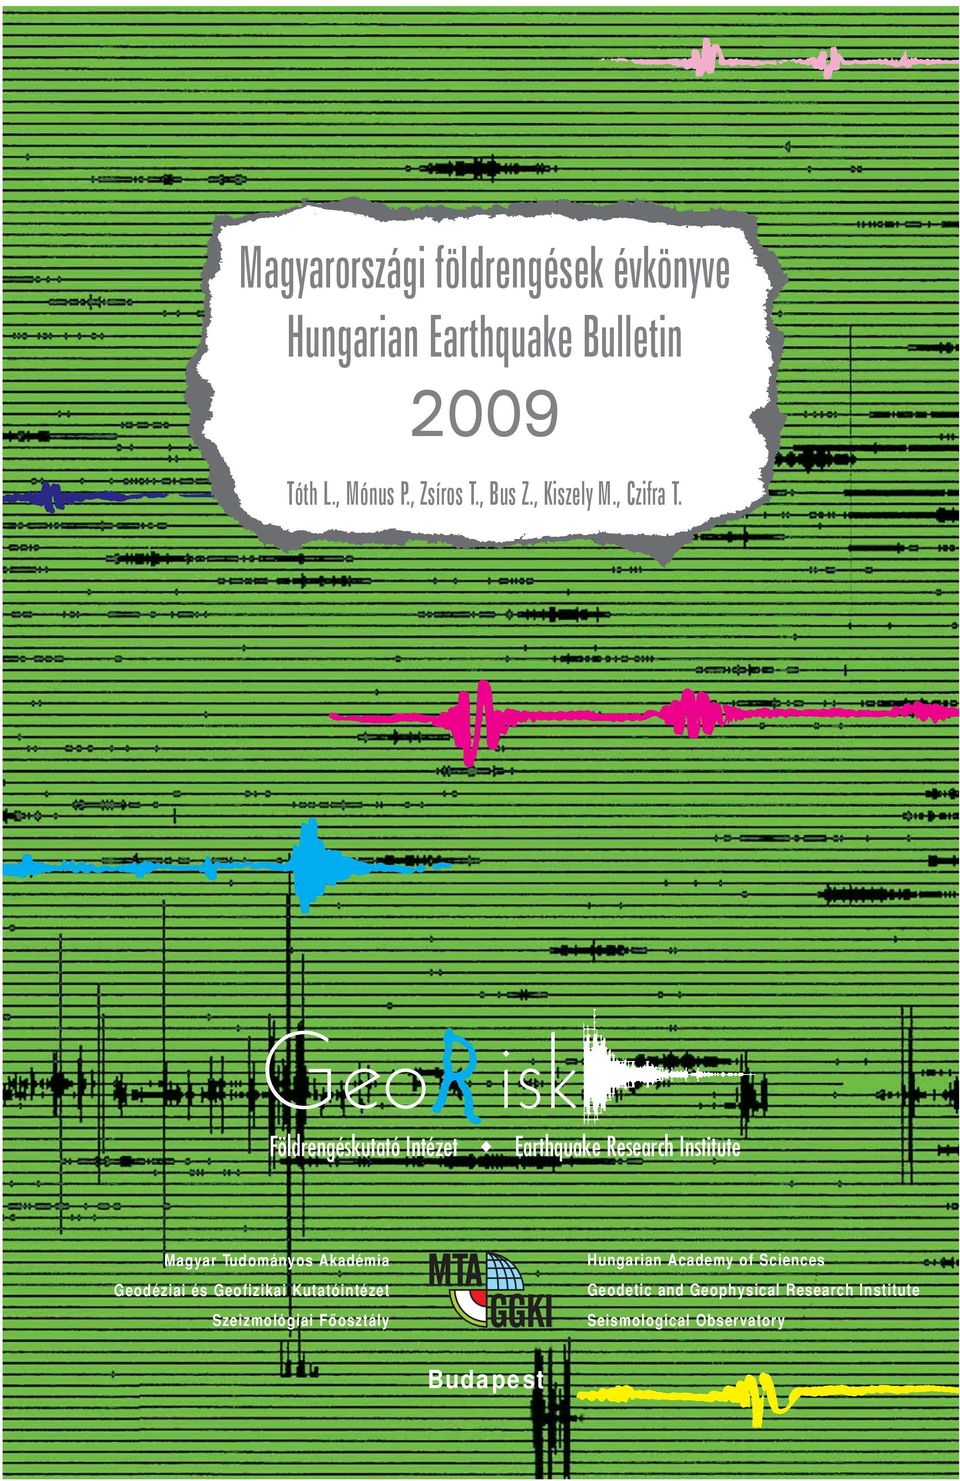 Hungarian Earthquake Bulletin 2009 Tóth L., Mónus P., Zsíros T., Bus Z., Kiszely M., Czifra T.